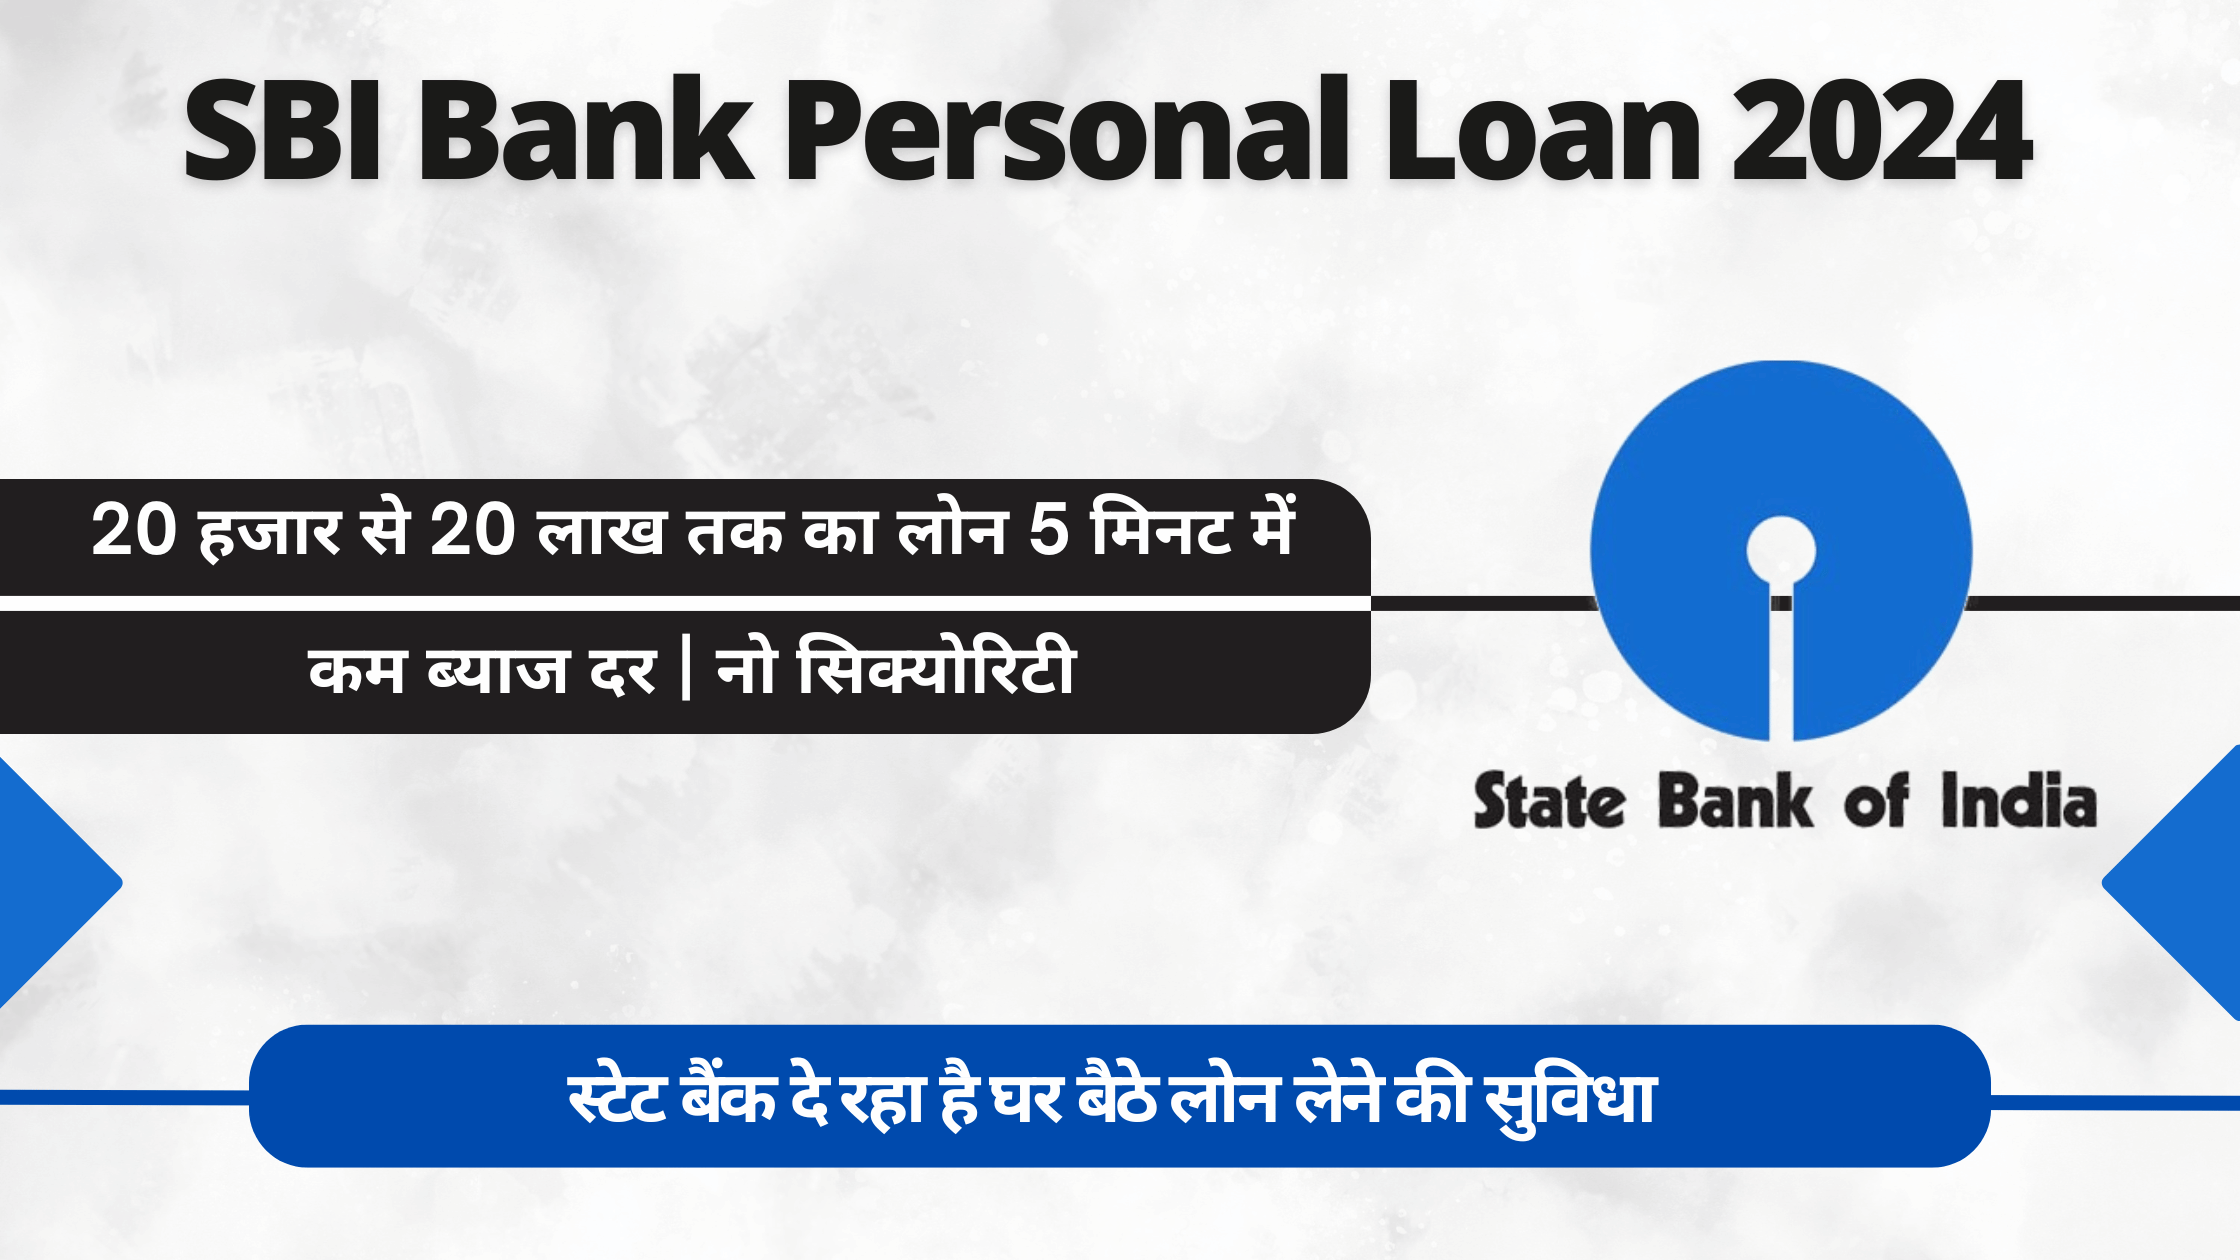 SBI Bank Personal Loan 2024